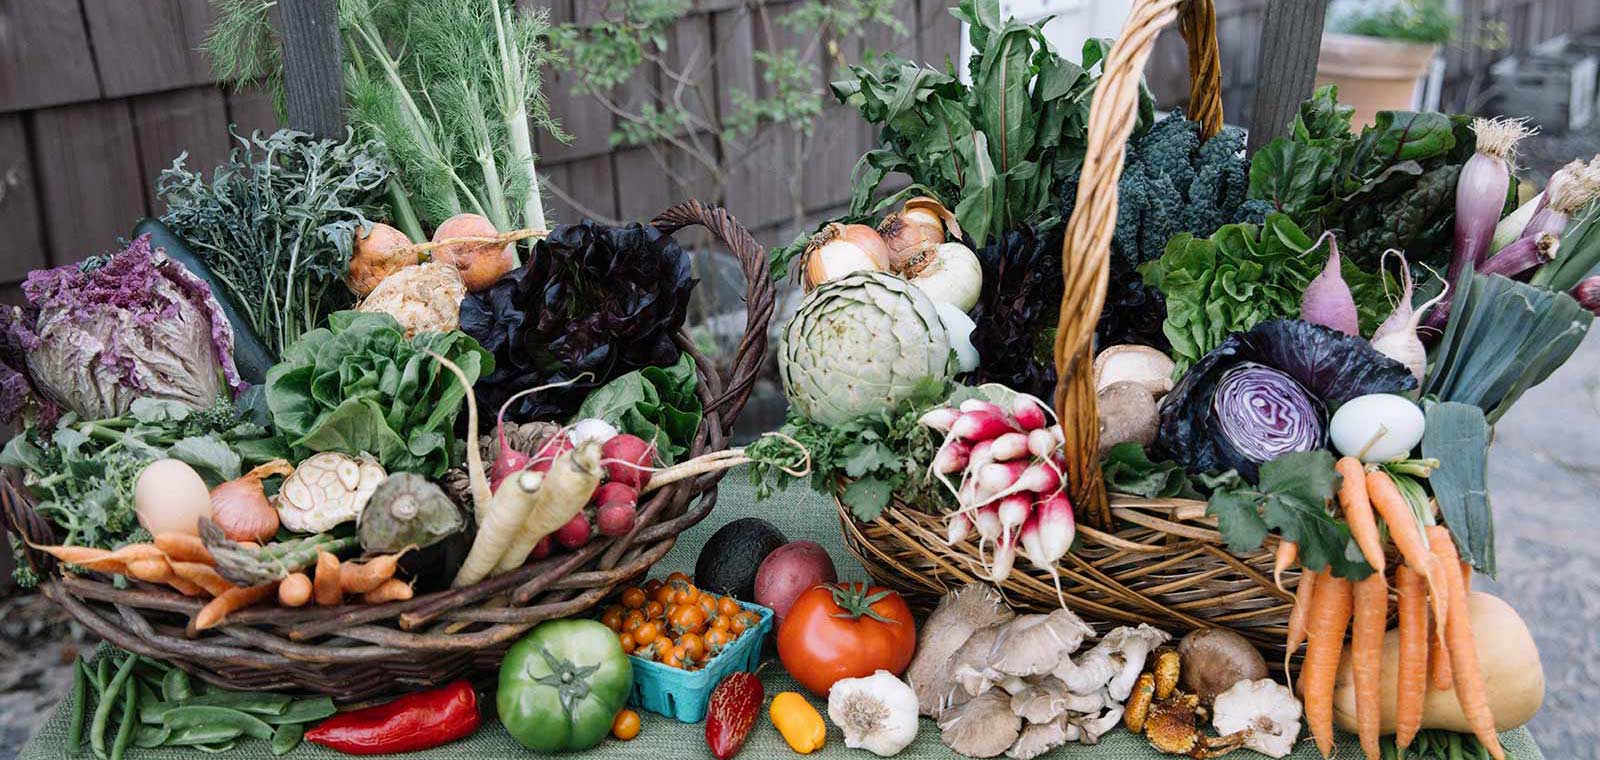 Baskets of veggies